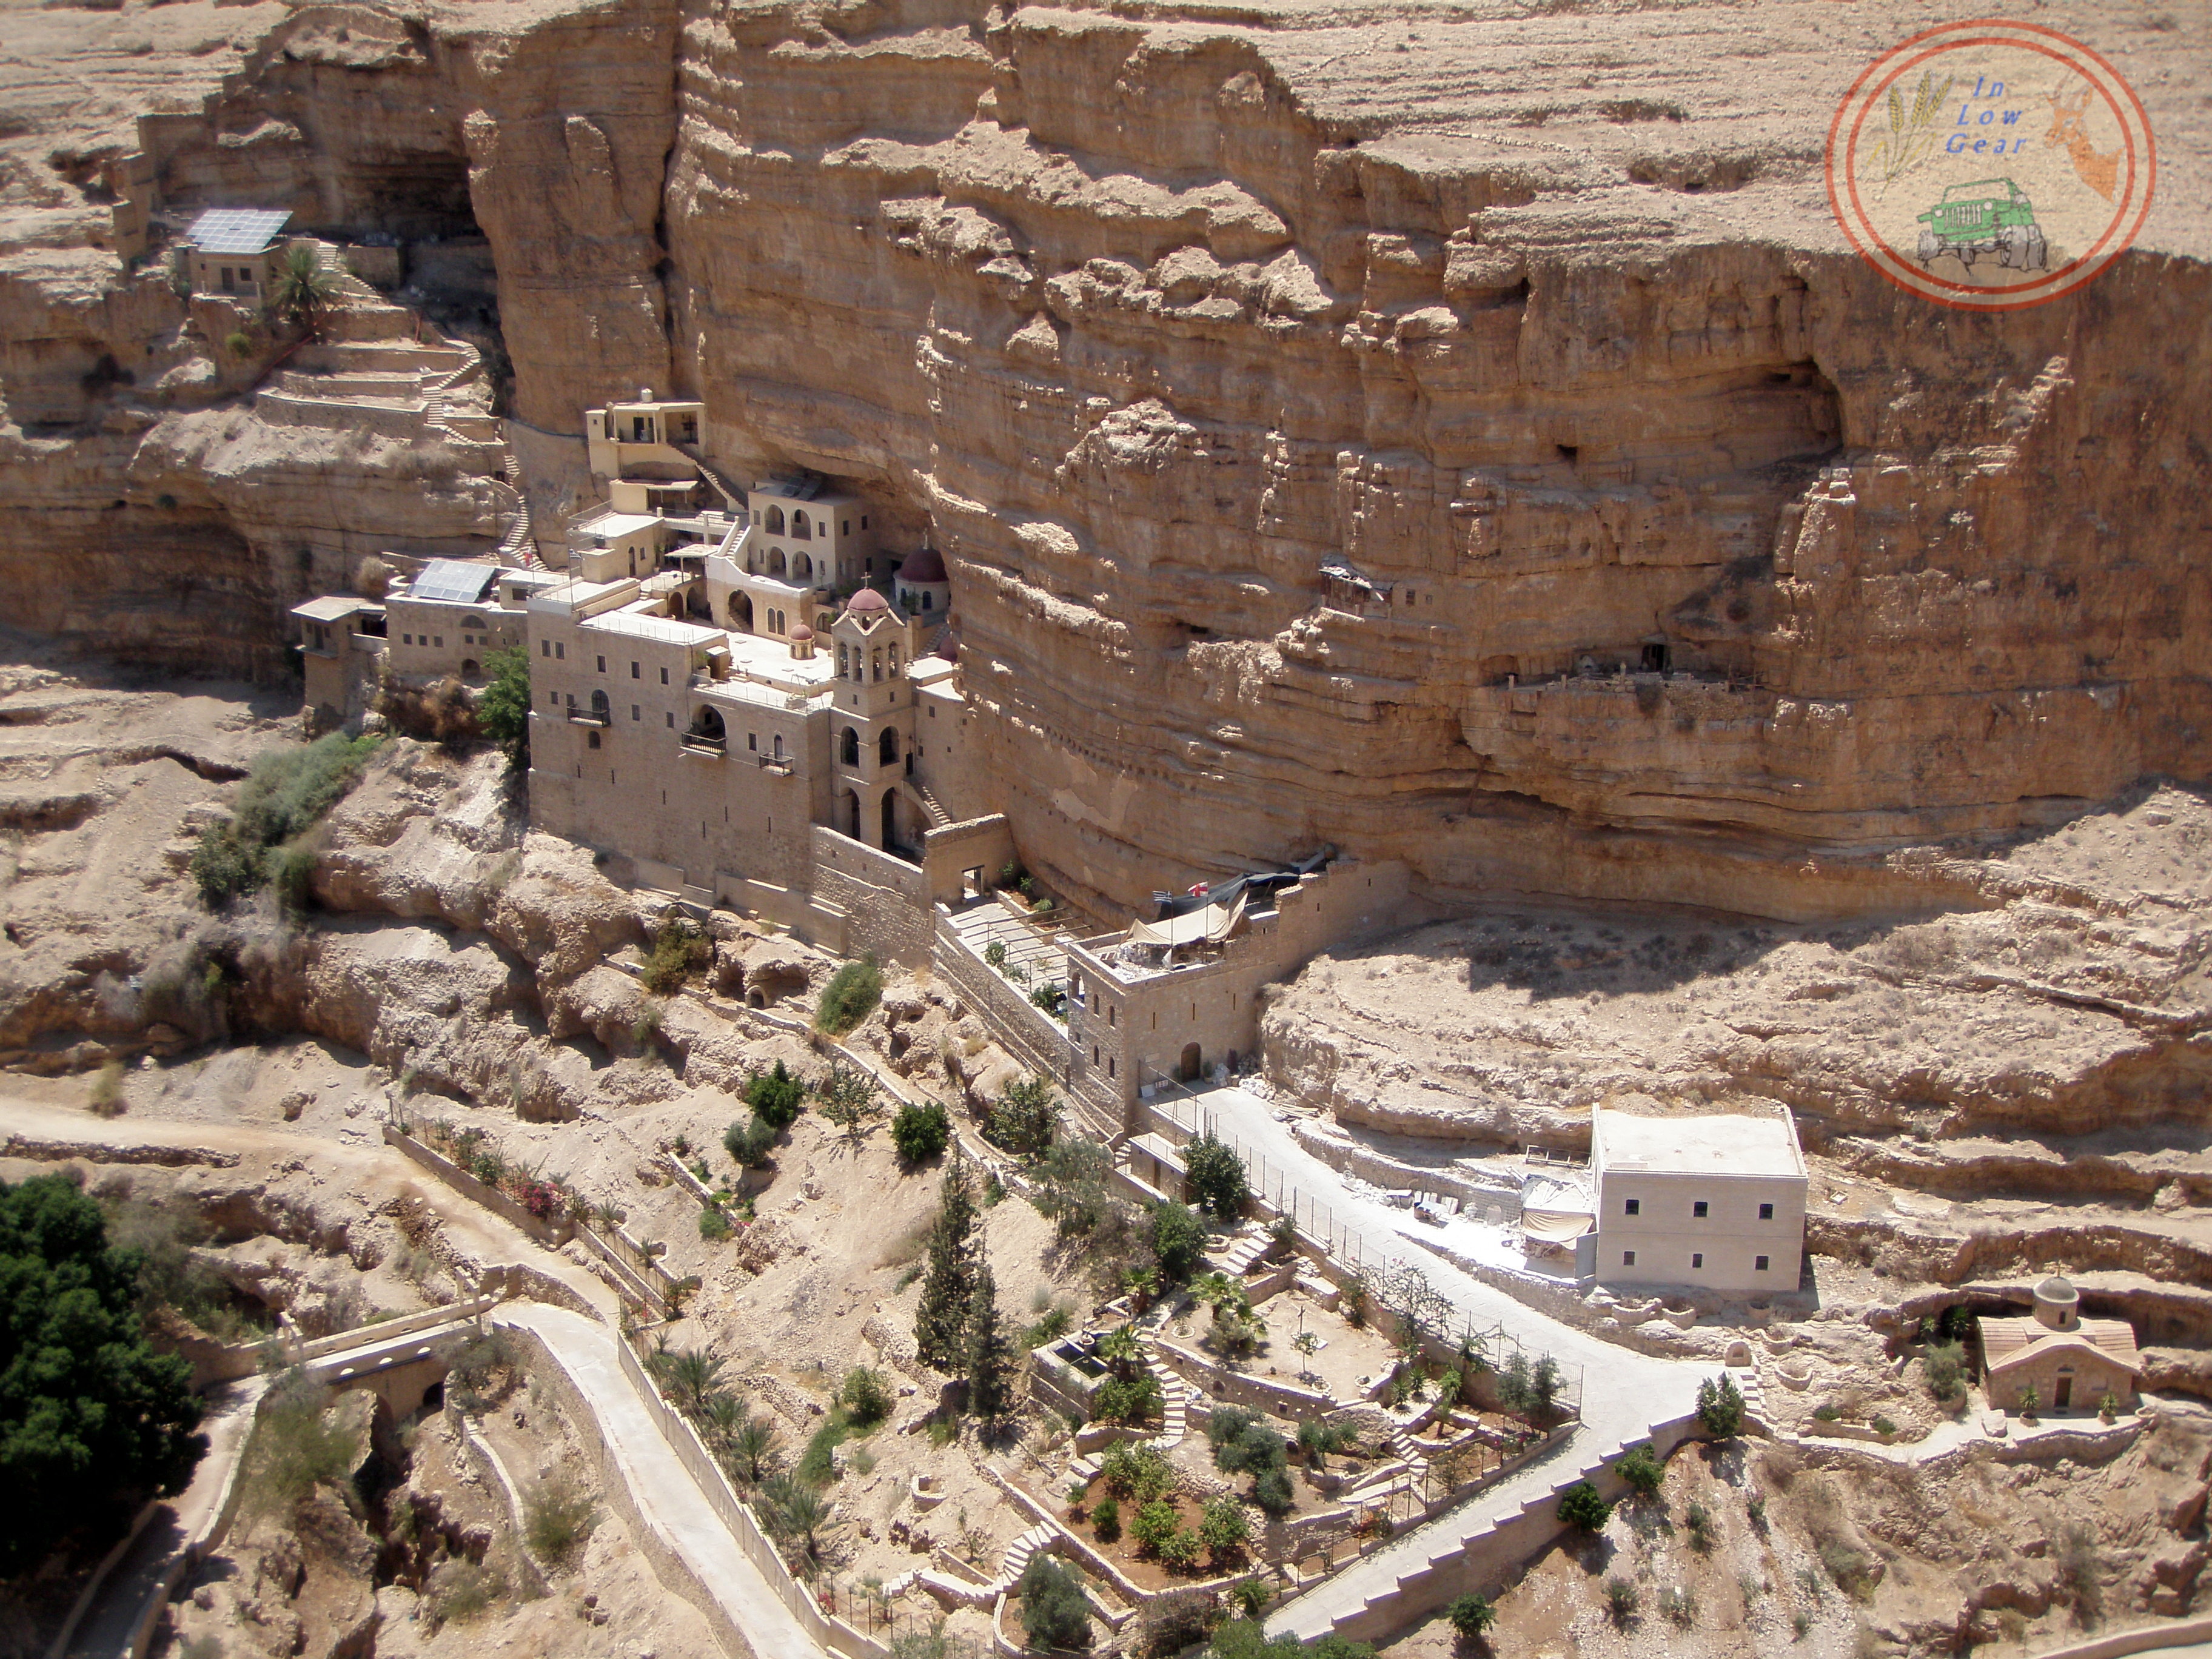 St. George monastery in the Judea desert.